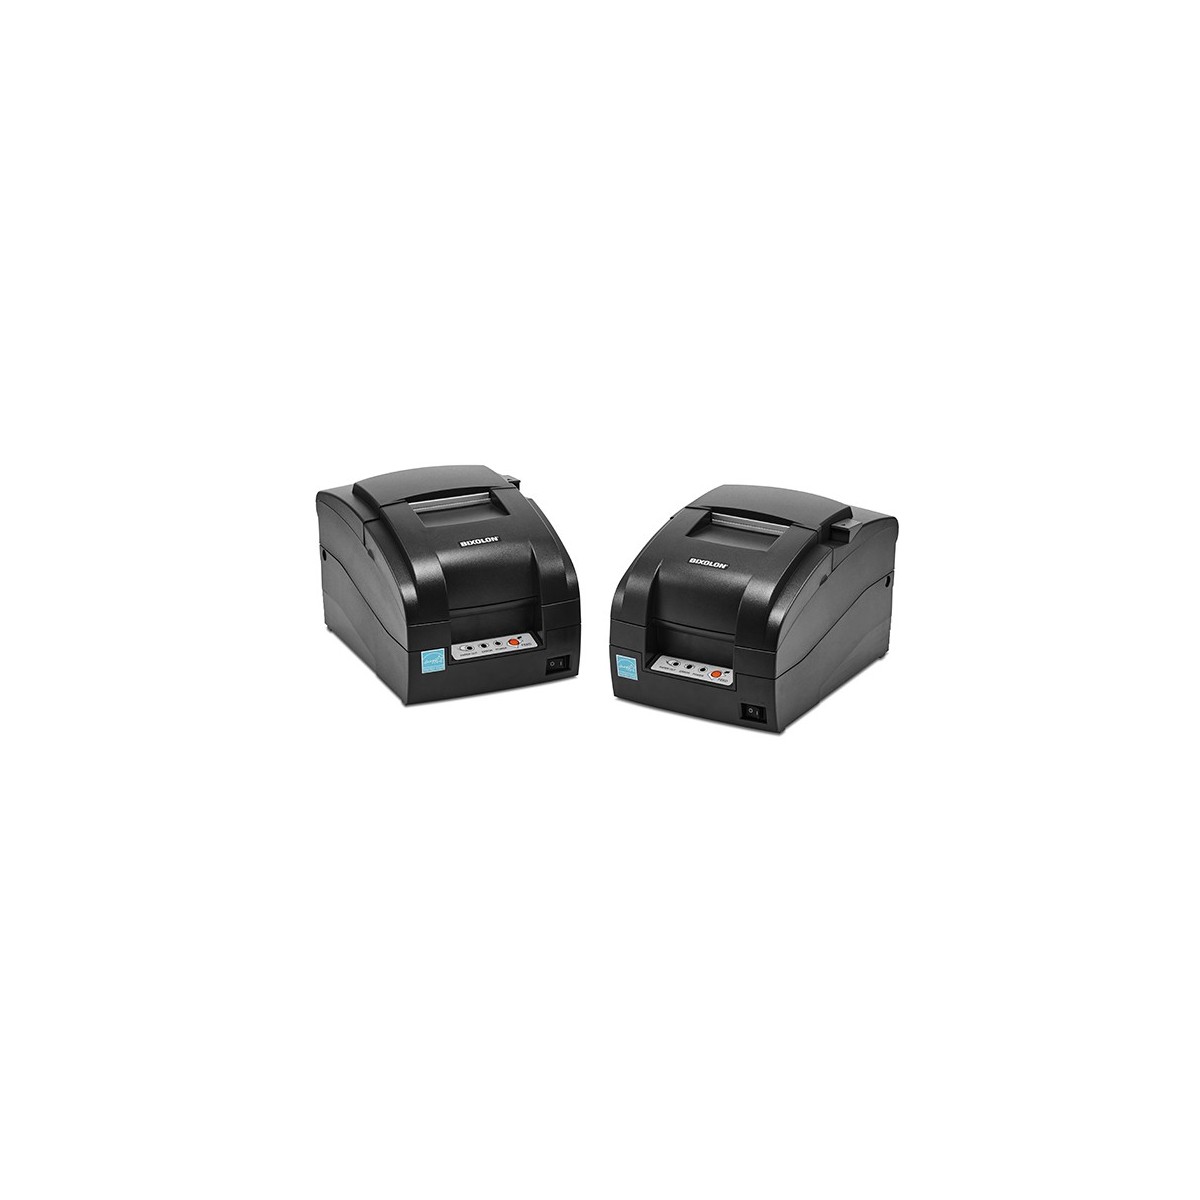 BIXOLON SRP-275III - Dot matrix - POS printer - 5.1 lps - Wired - Black